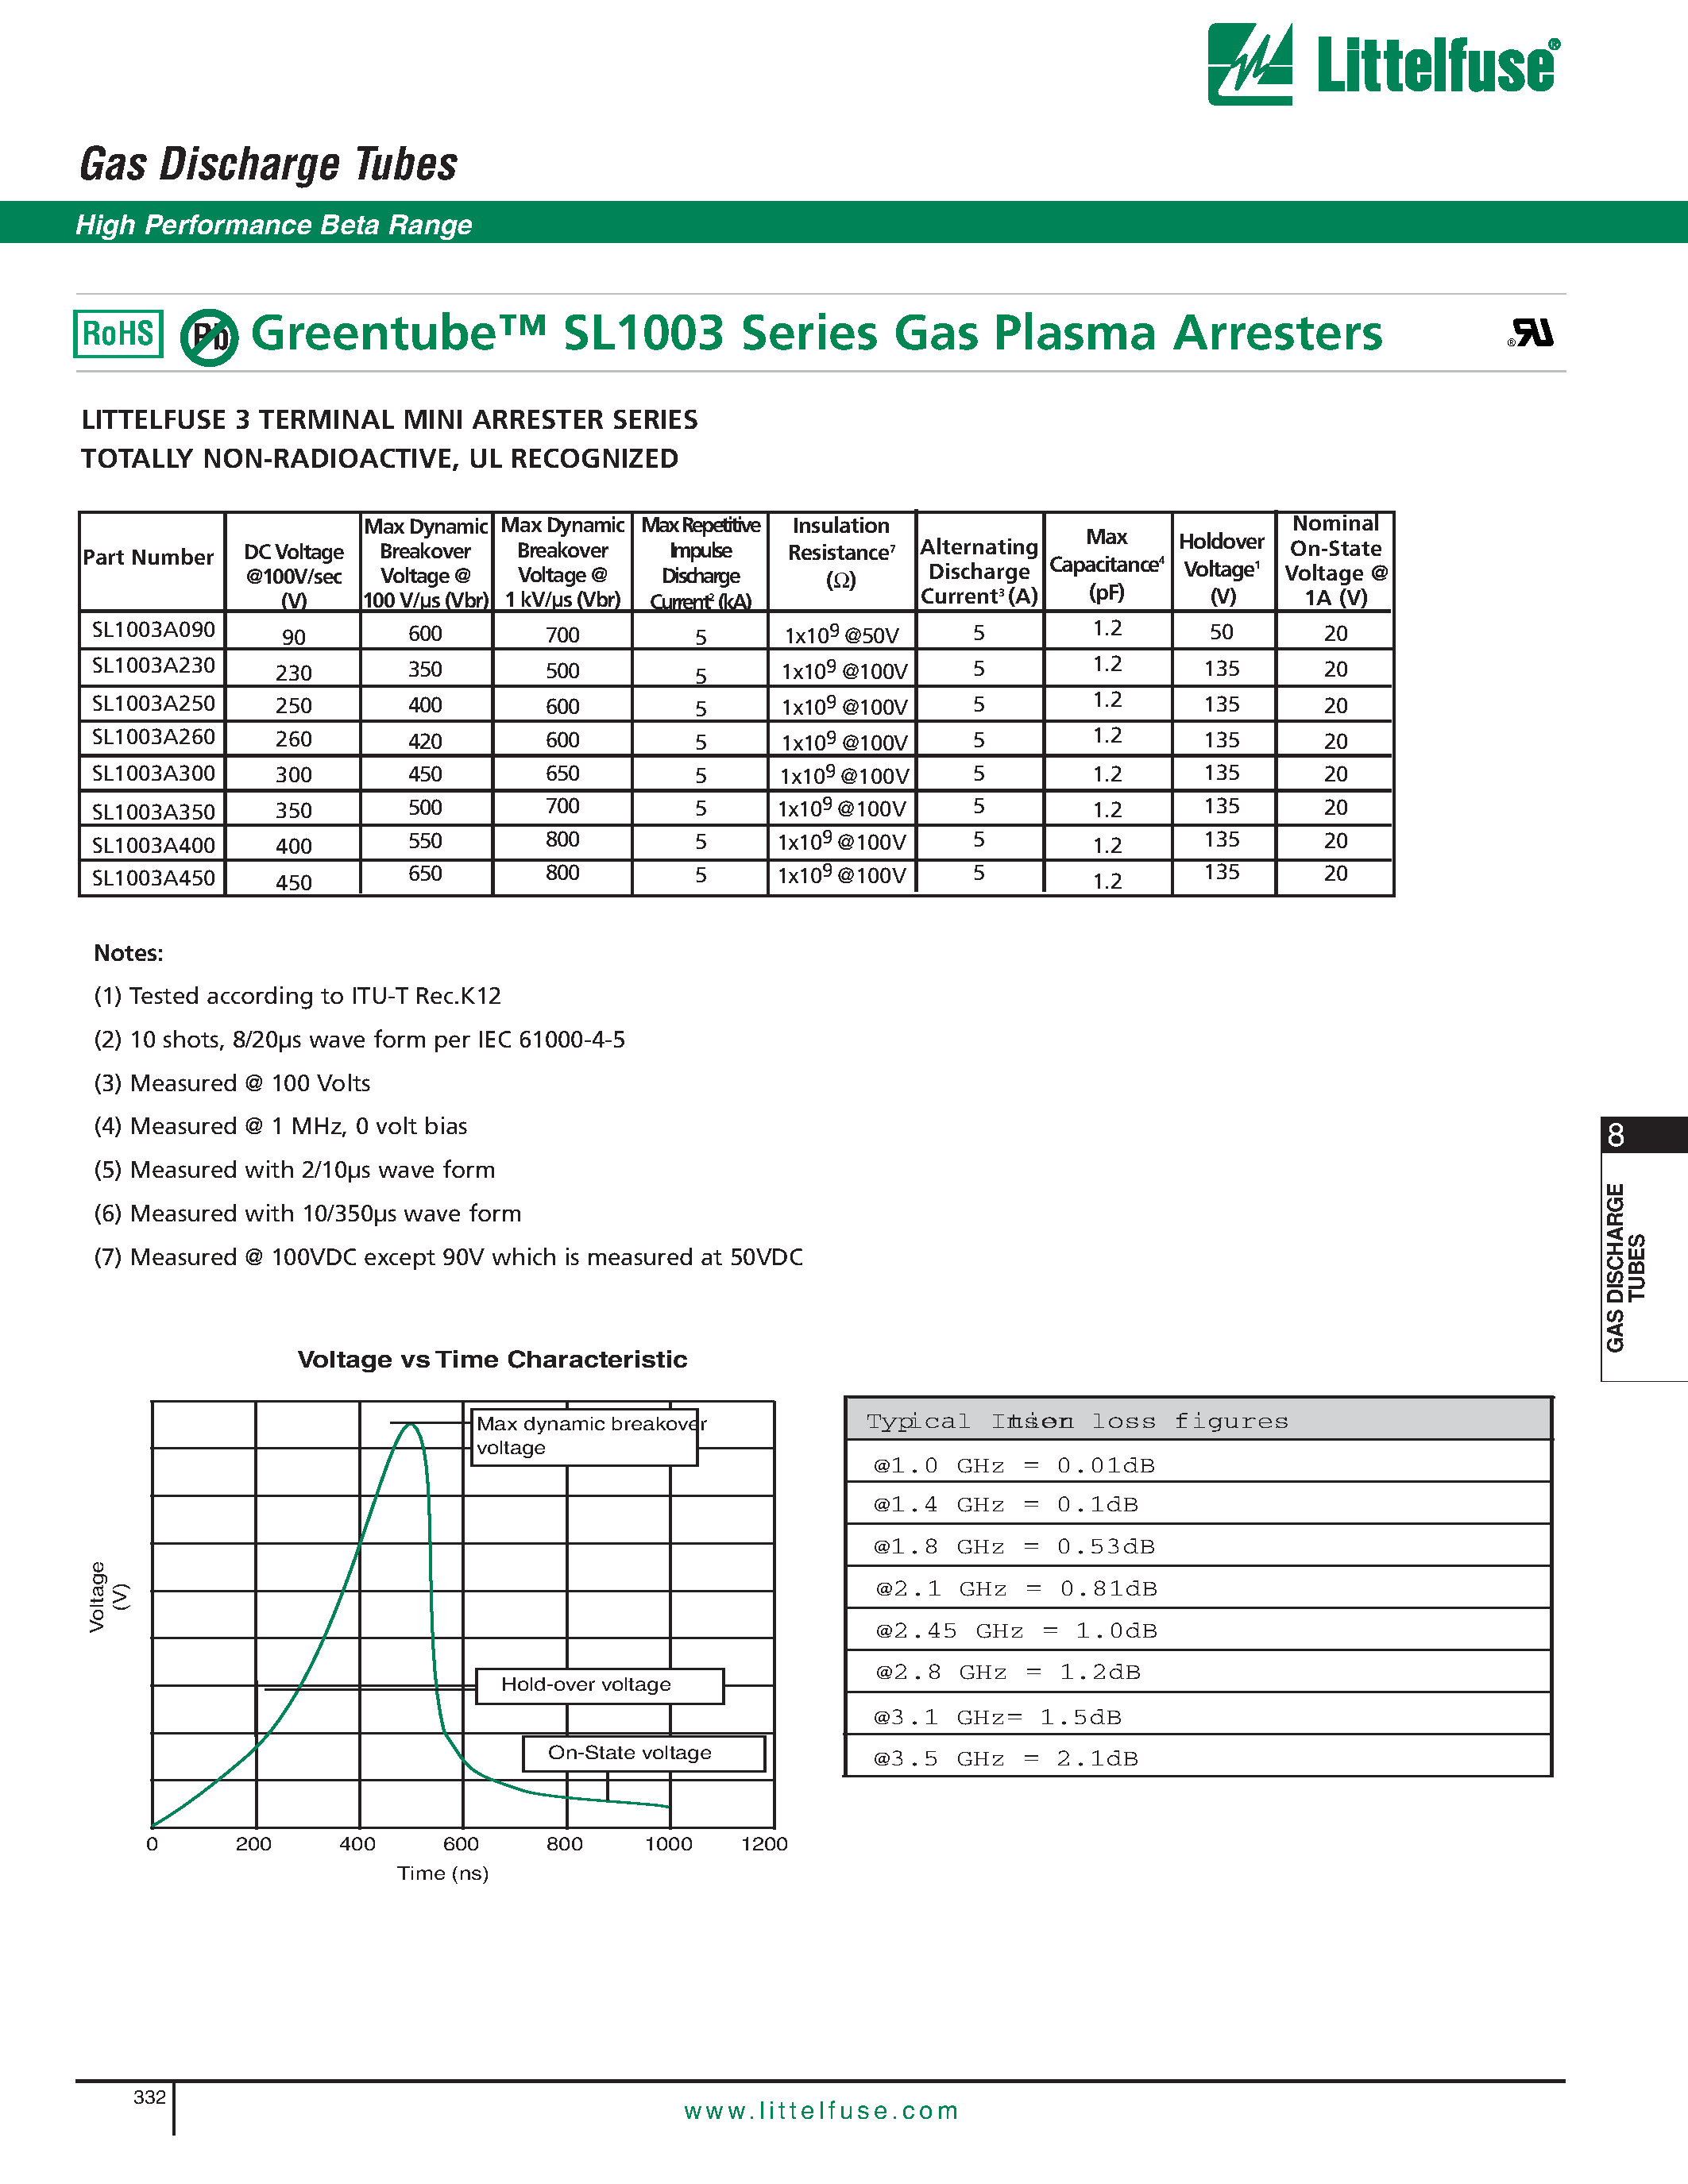 Даташит SL1003A300 - Greentube SL1003 Series Gas Plasma Arresters страница 2